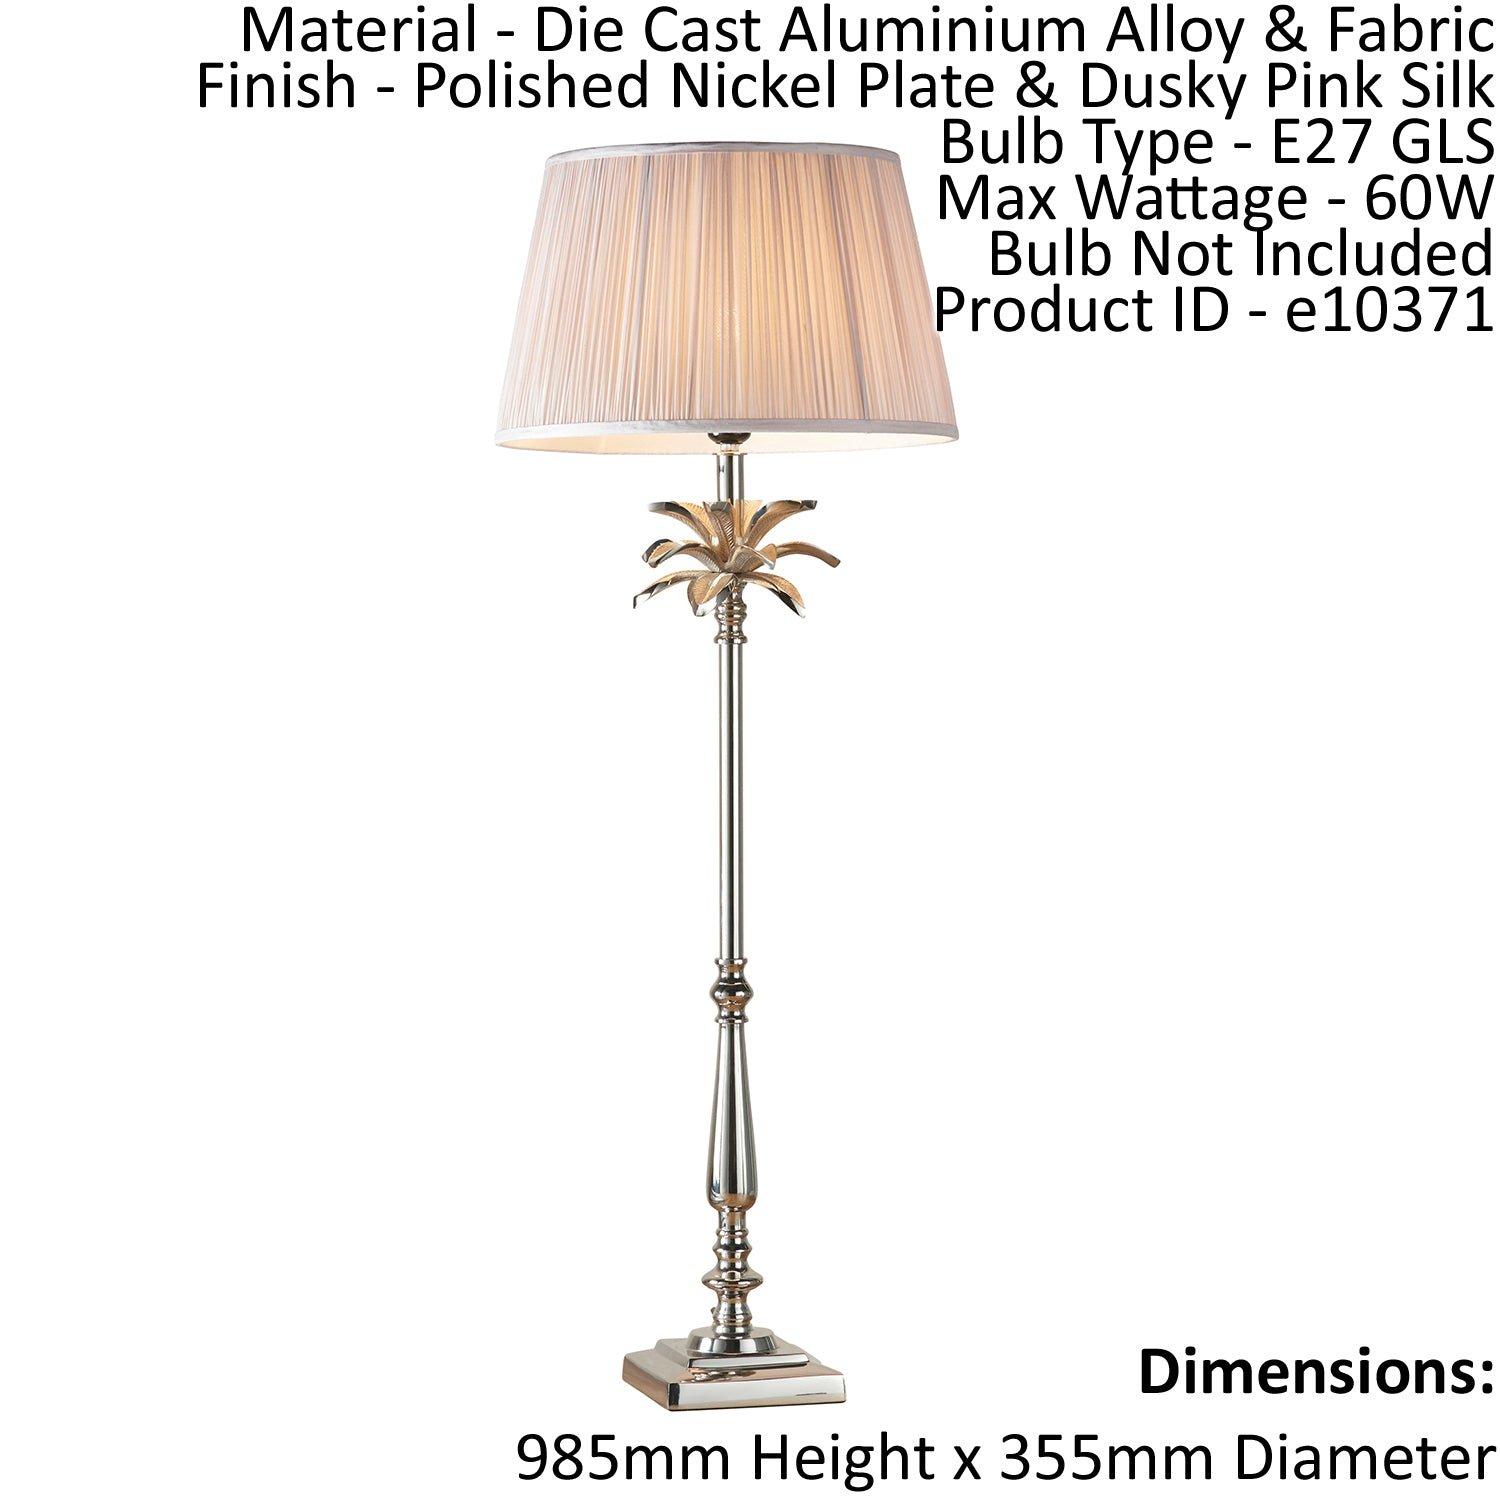 Table Lamp Polished Nickel & Dusky Pink Silk 60W E27 Bedside Light e10371